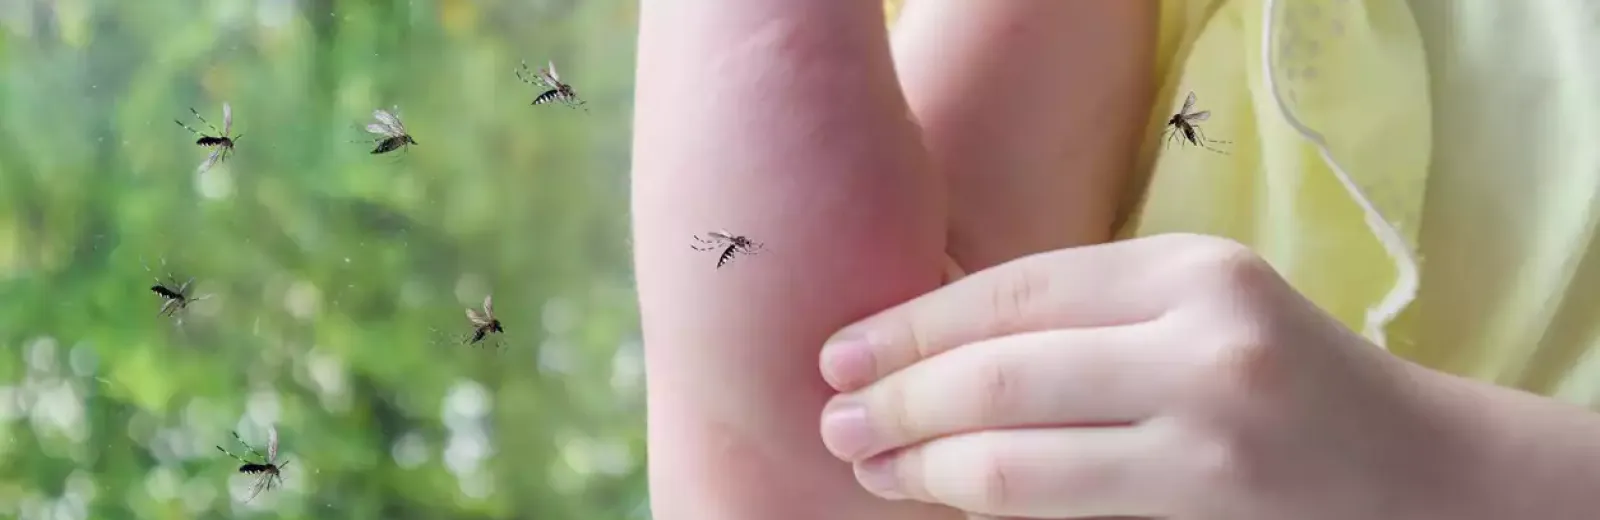 mosquitos-on-skin